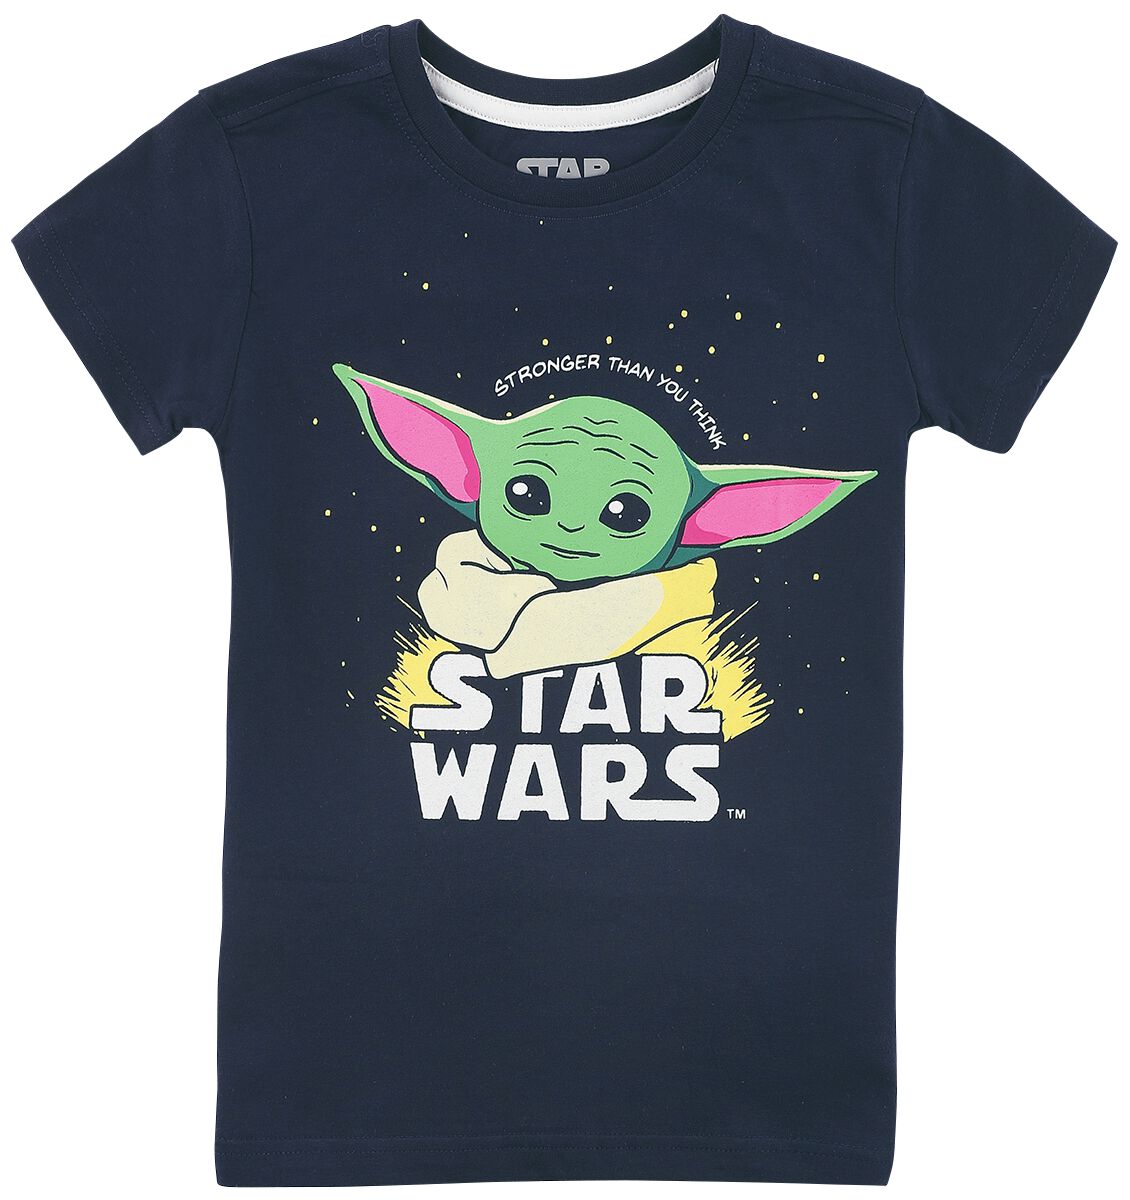 Star Wars Kids - The Mandalorian - Baby Yoda - Grogu T-Shirt dunkelblau in 110/116 von Star Wars